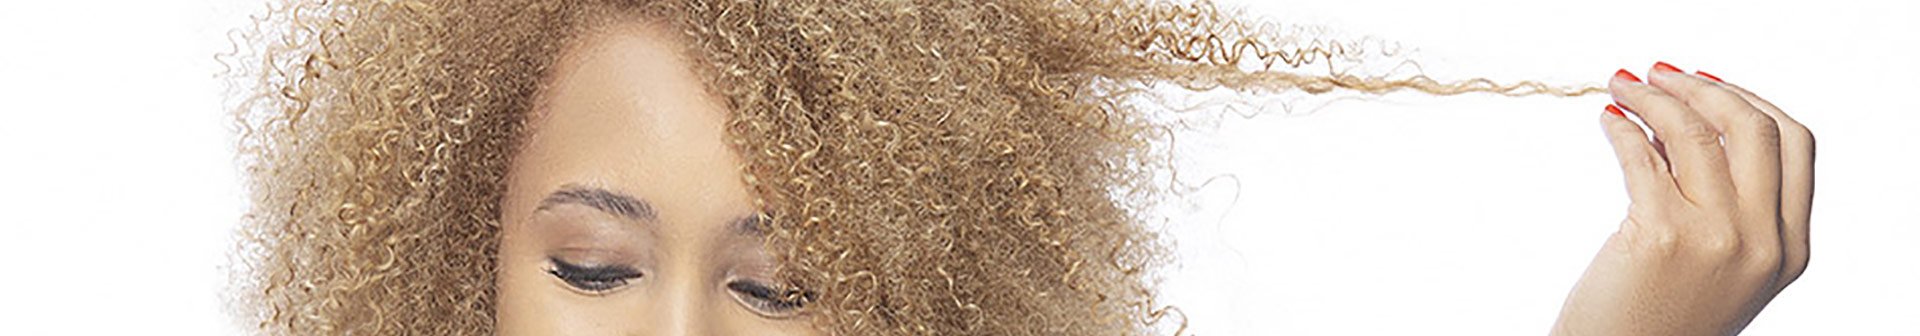 Curly blonde hair, healthy hair